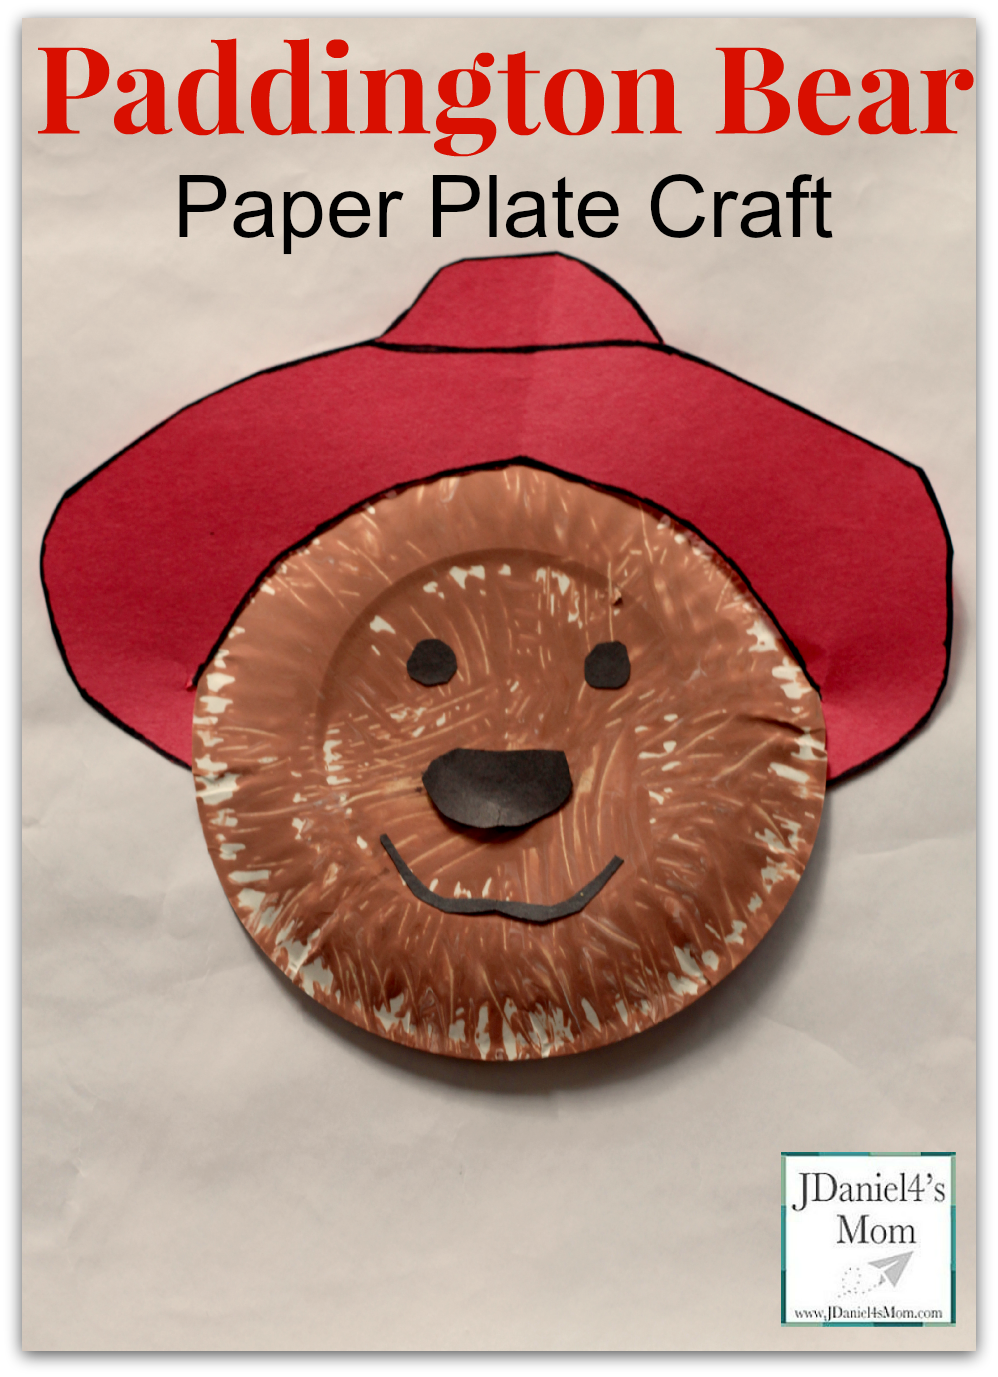 Paddington Bear Paper Plate Craft